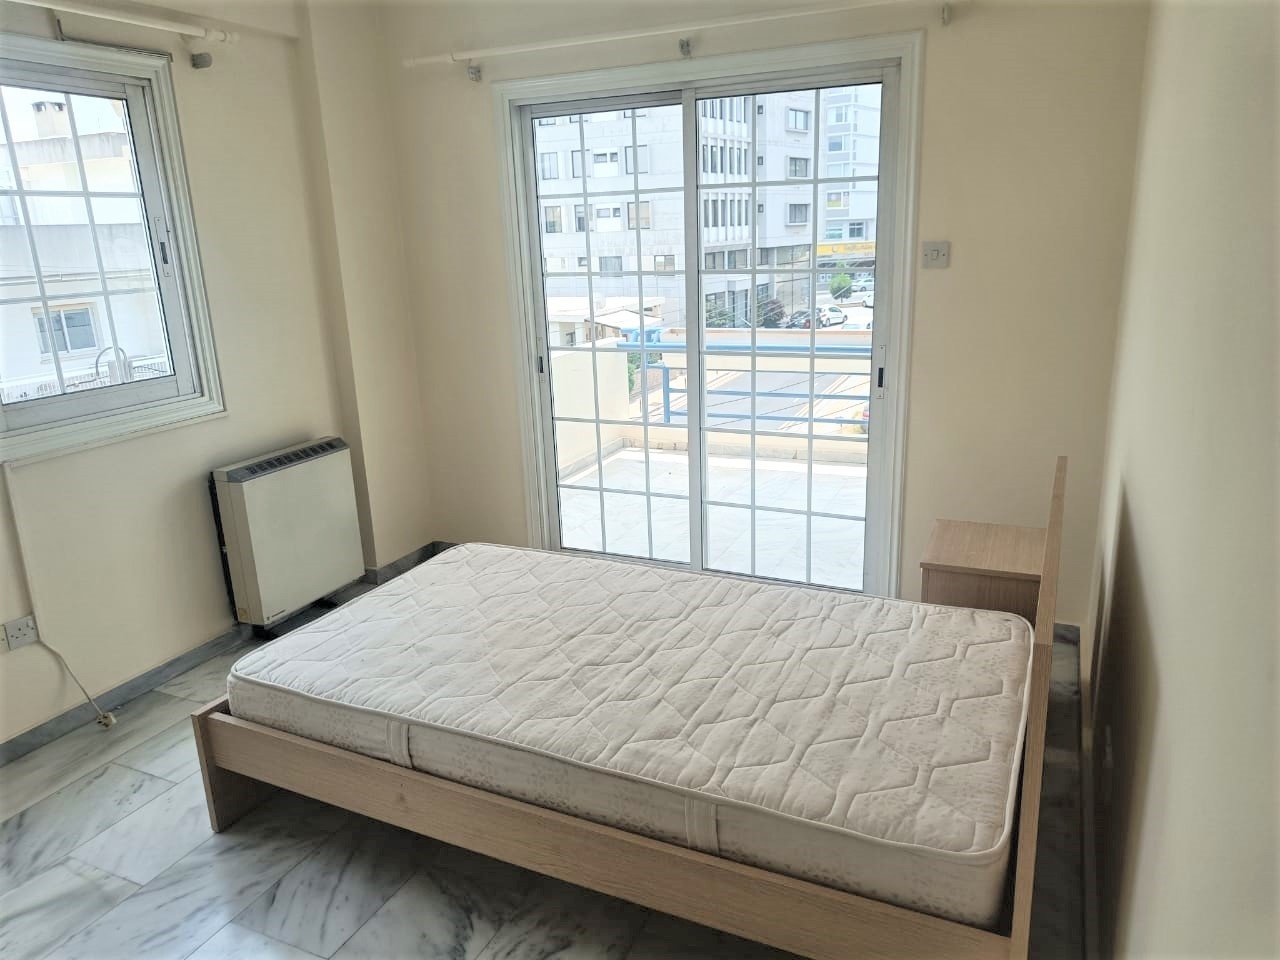 For Rent: Apartments, Engomi, Nicosia, Cyprus FC-38880 - #9